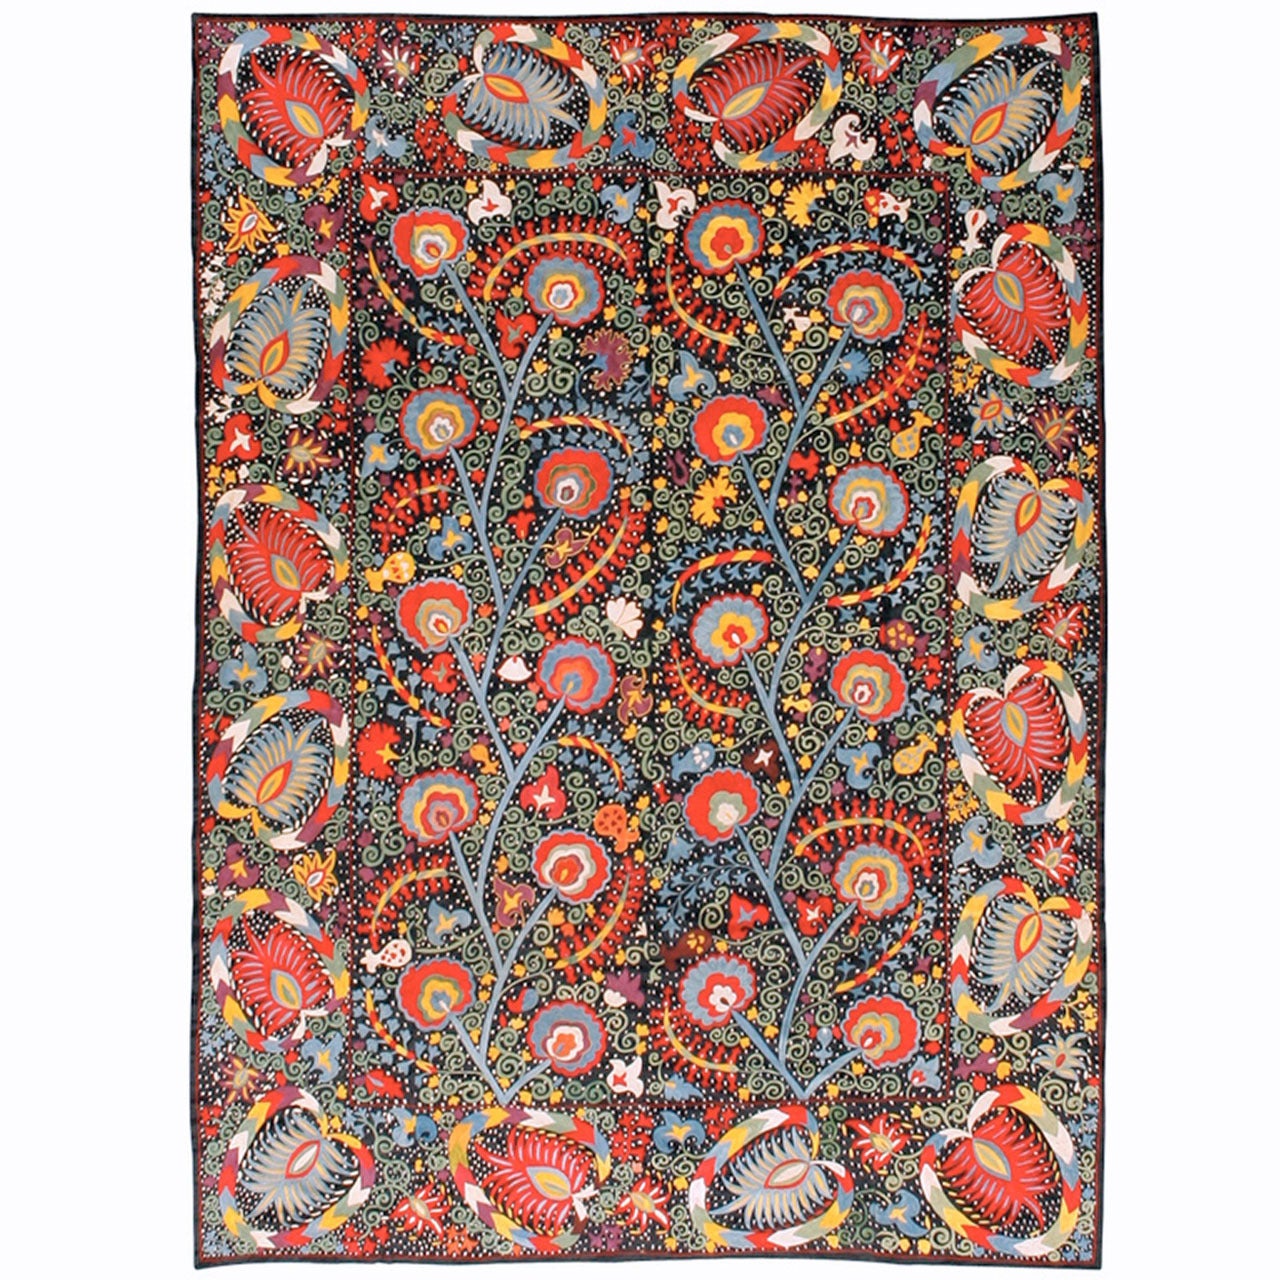 Vintage Suzanni Embroidery